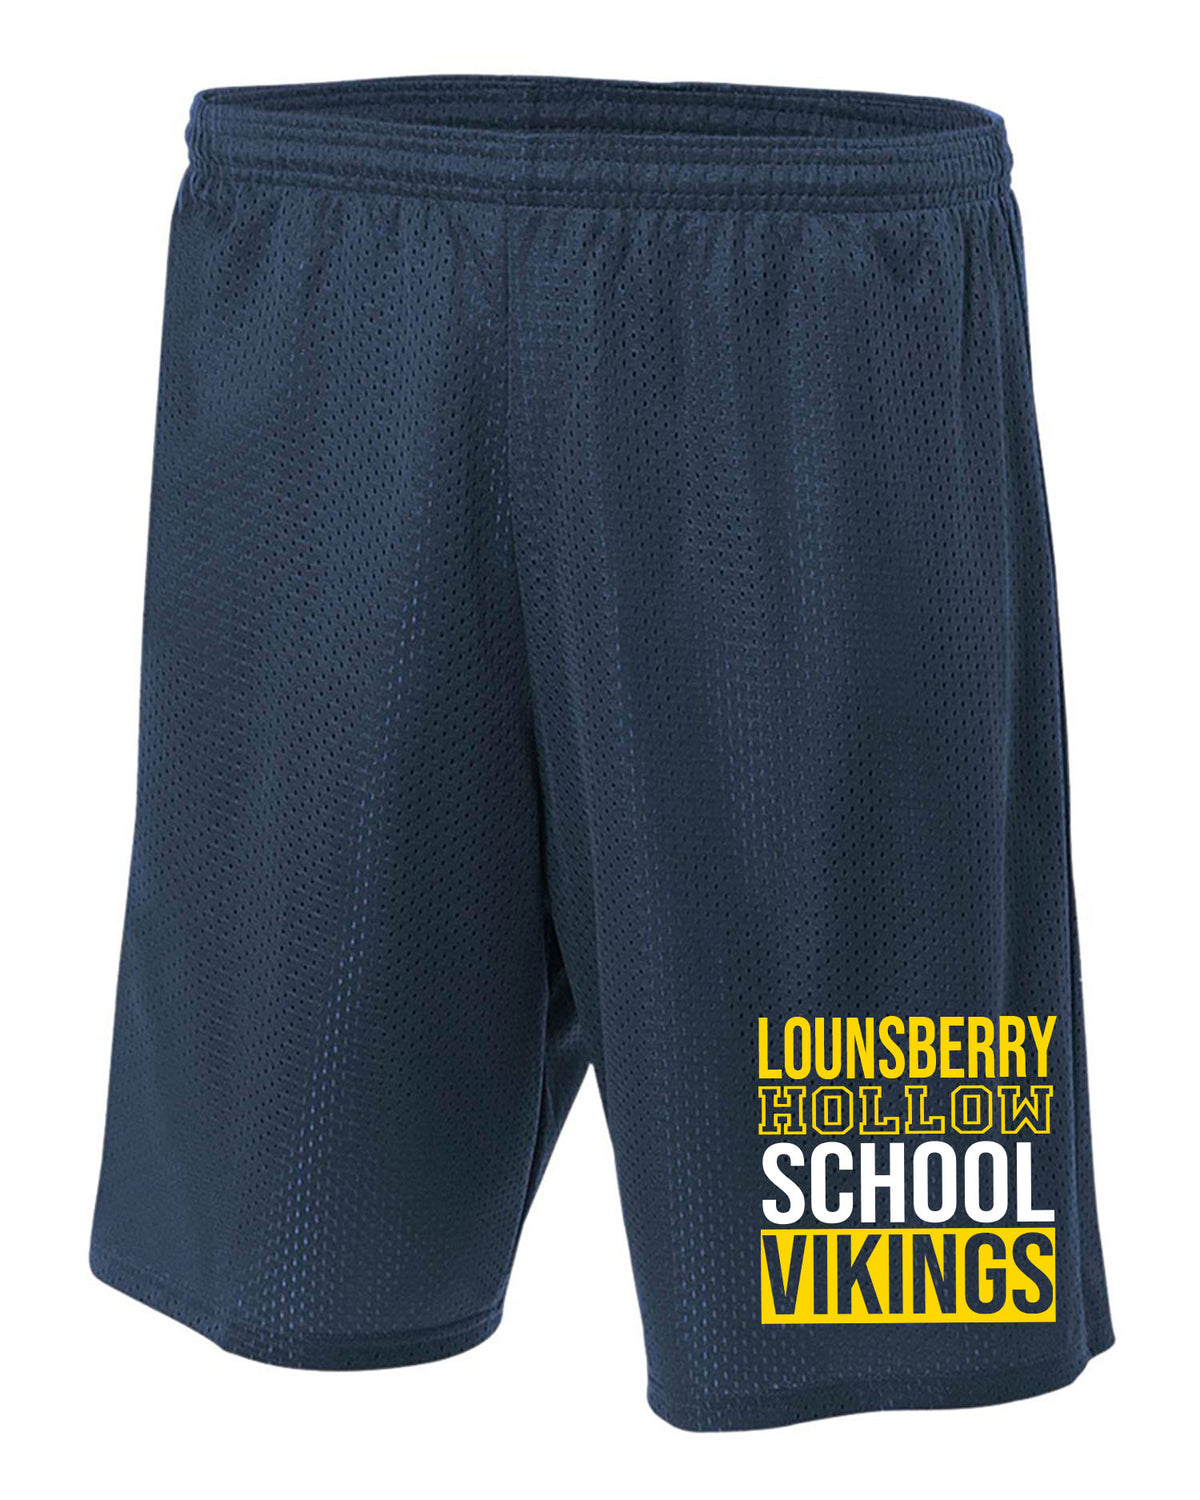 Lounsberry Hollow Design 1 Mesh Shorts